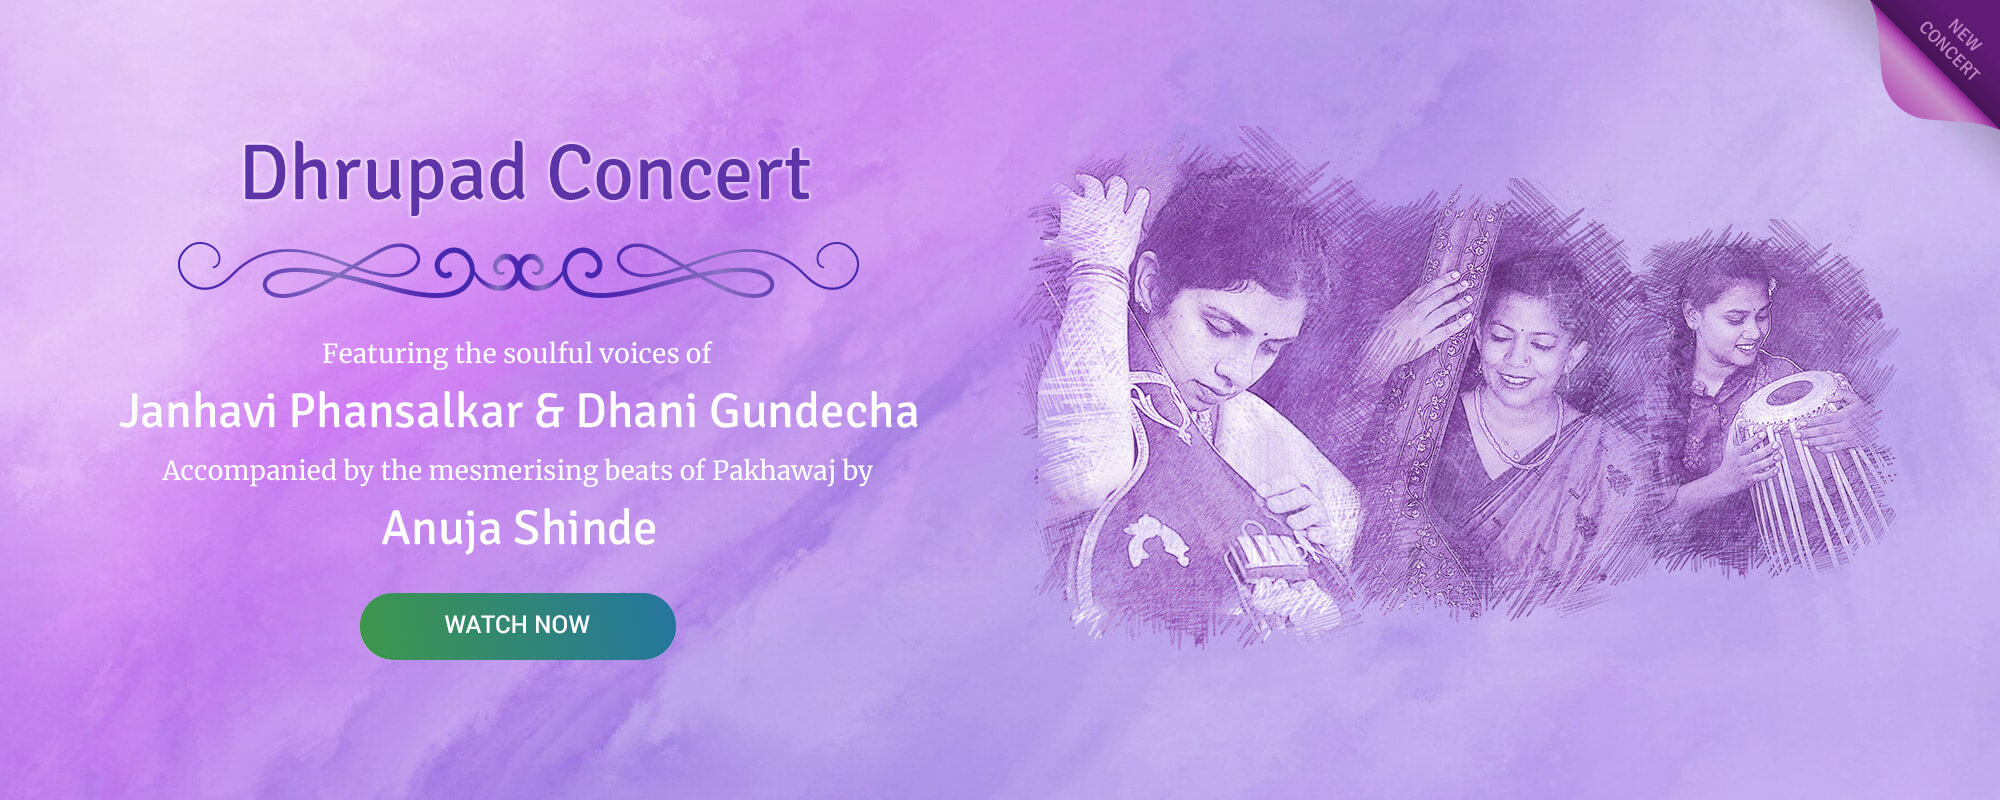 Dhrupad Sisters Concert sangeetsabha online